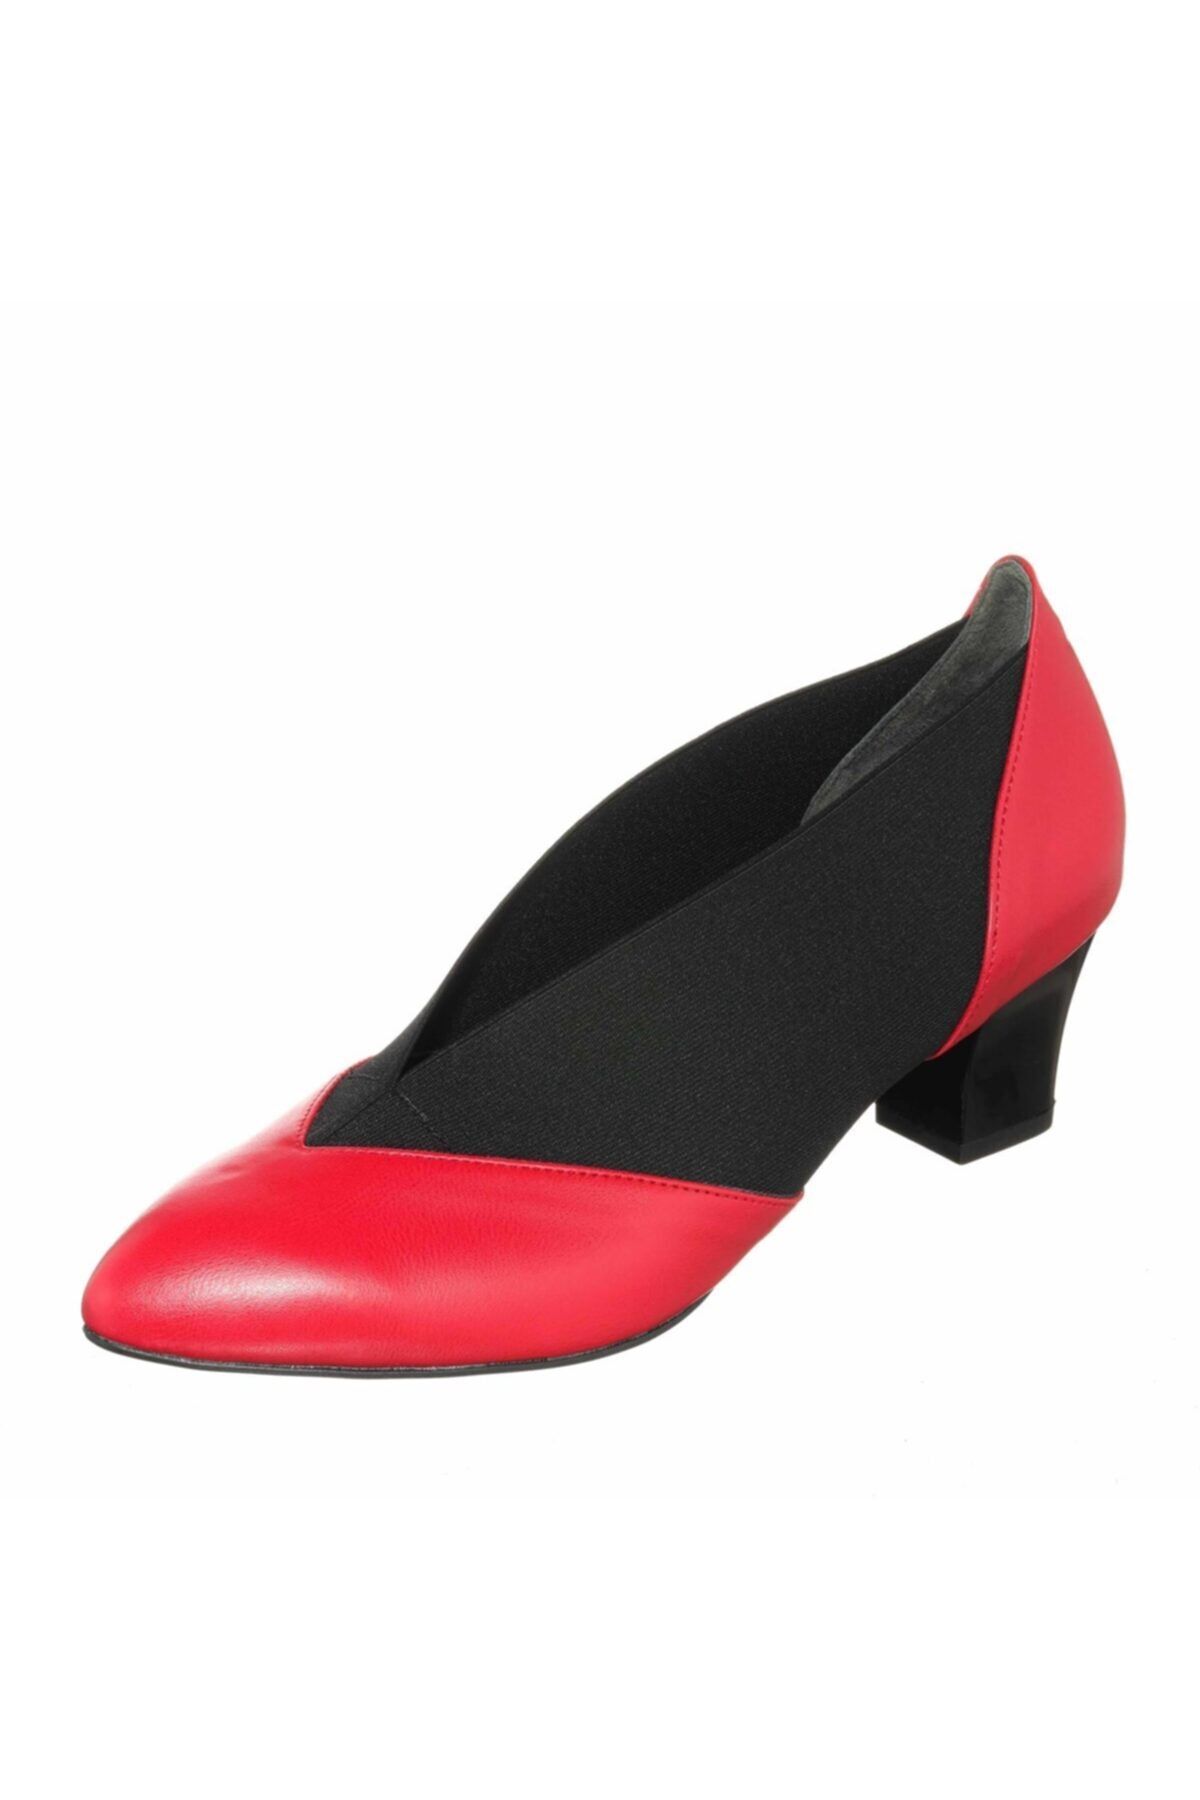 İriadam Kdr1914 Kırmızı Siyah Lastikli Rahat Geniş Kallıp Büyük Numara Ayakkabı